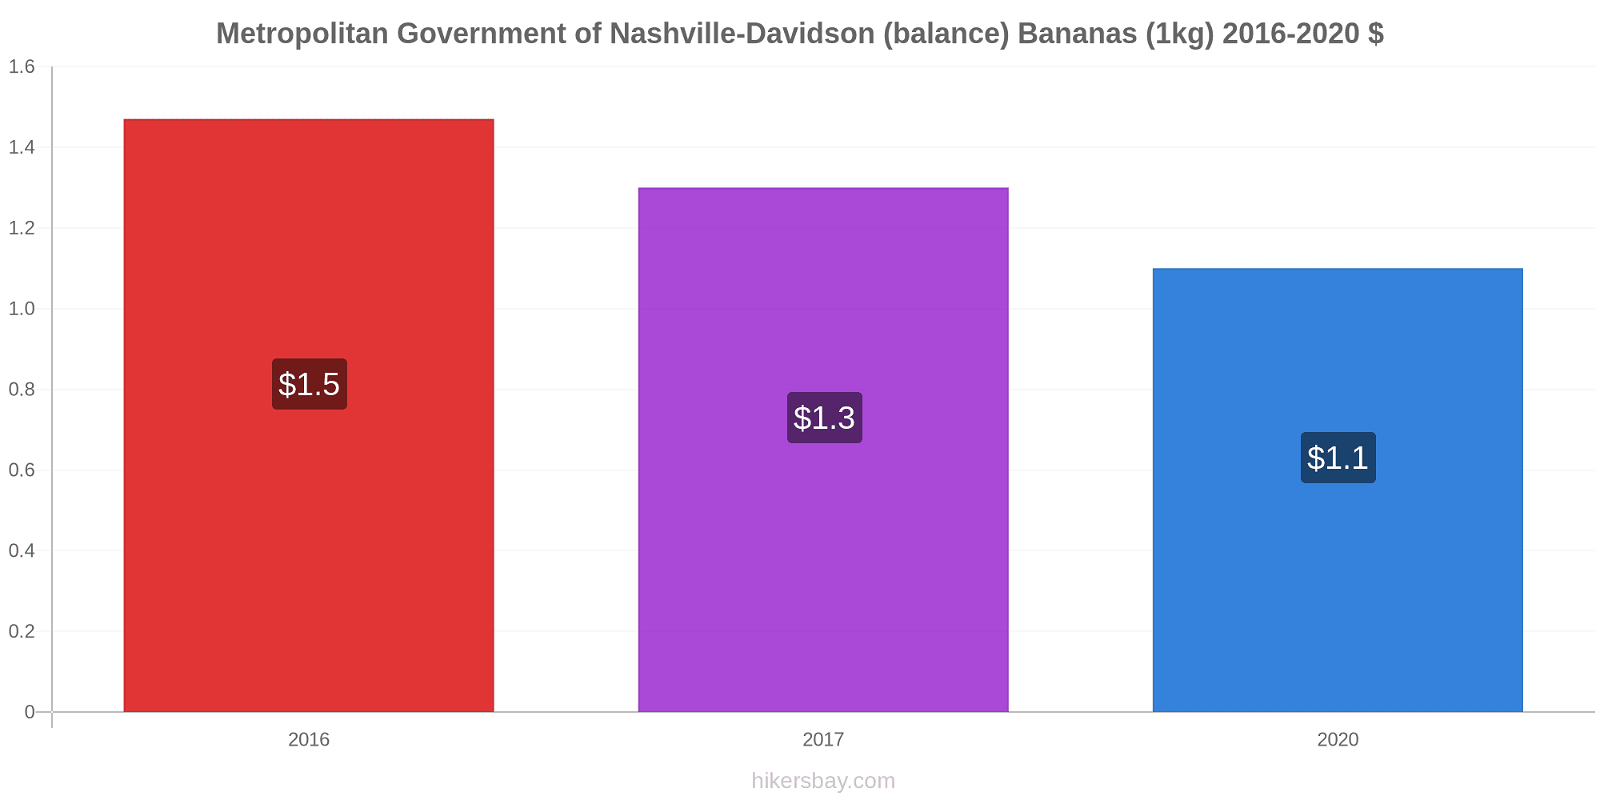 Metropolitan Government of Nashville-Davidson (balance) price changes Bananas (1kg) hikersbay.com